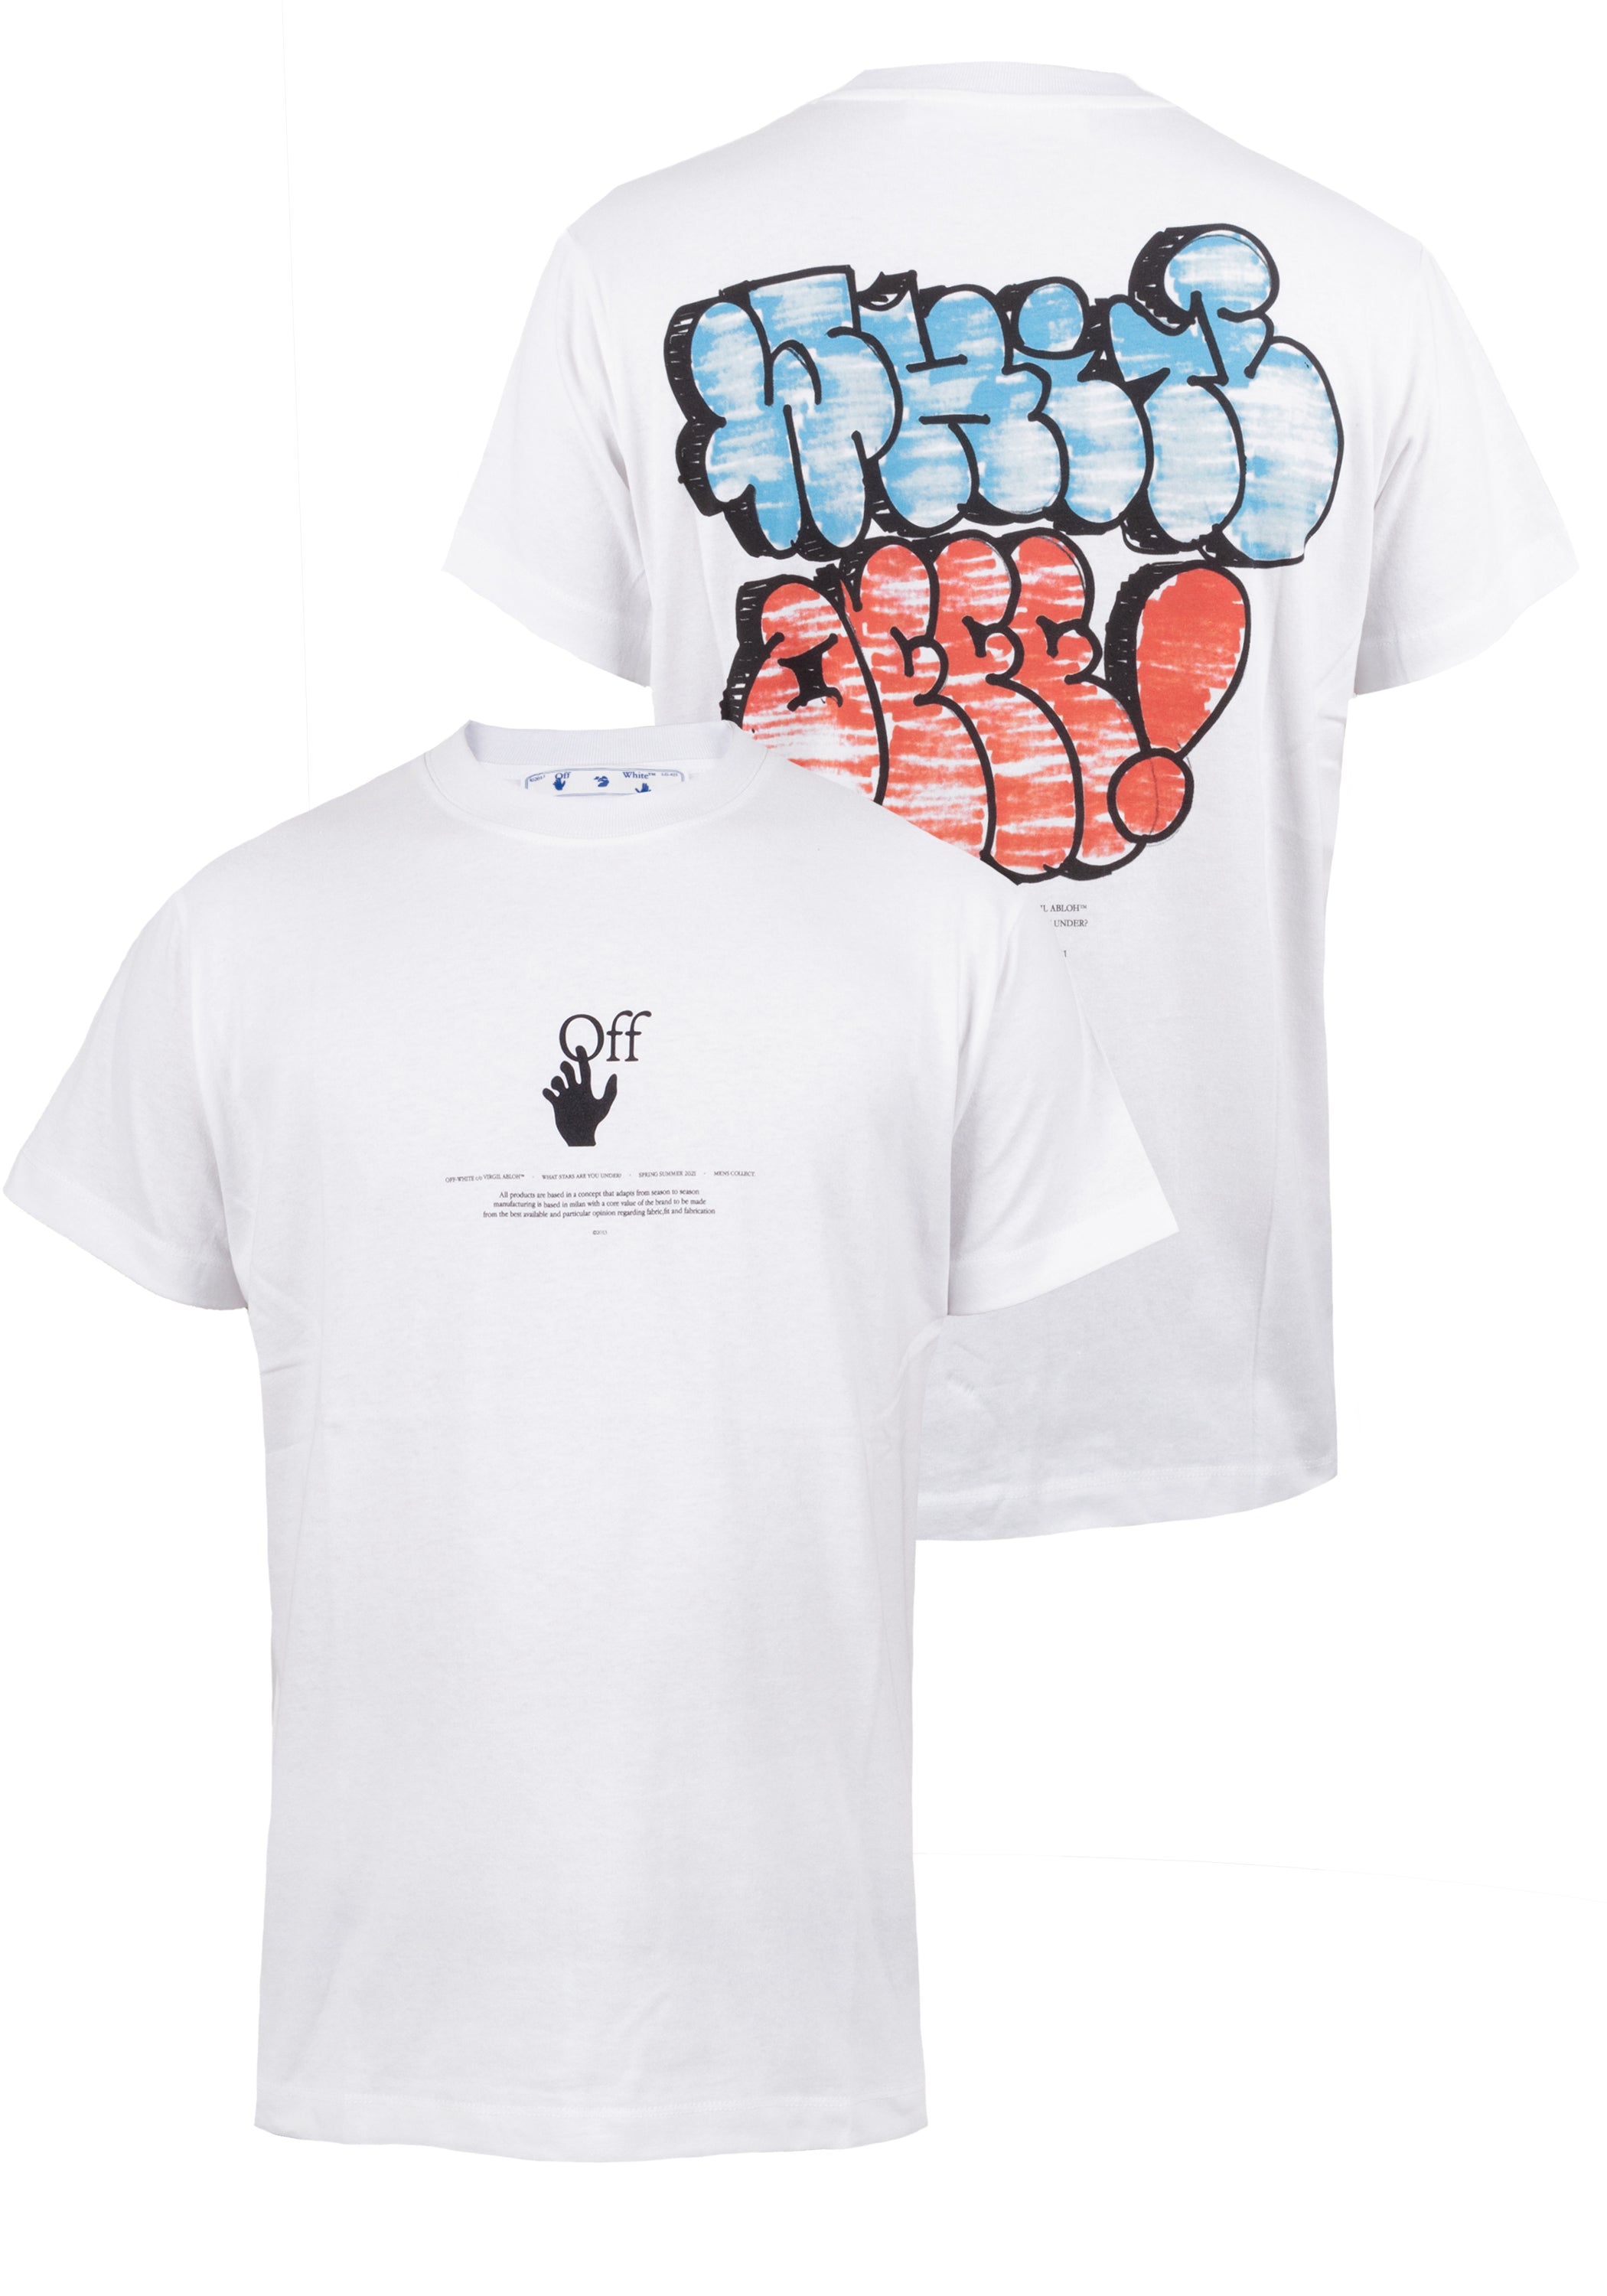 Off White Herren T-Shirt | GRAFF S/S OVER WHITE HIGH RISE –